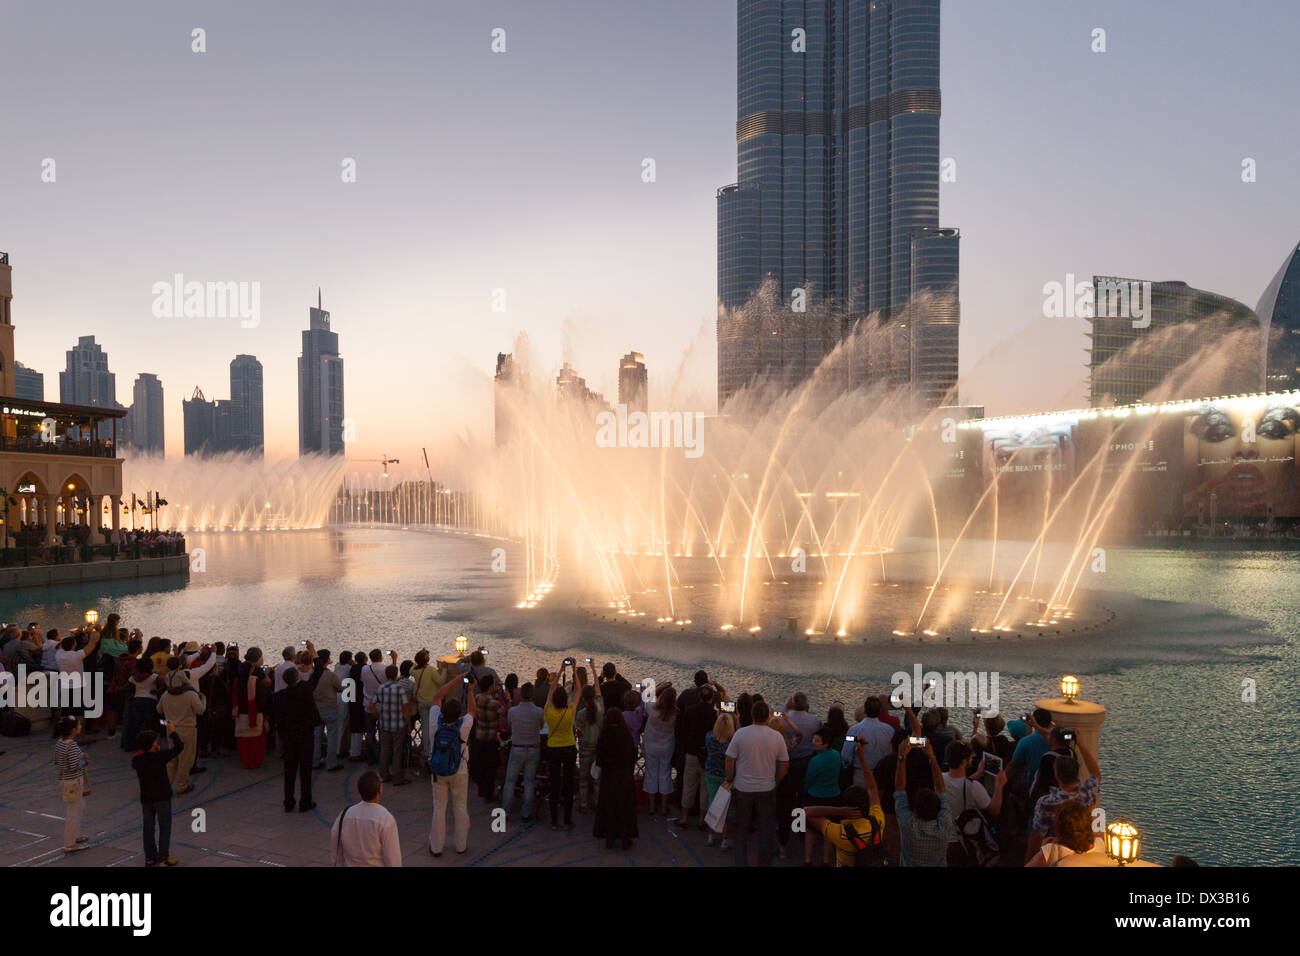 People watching the Dubai fountain in front of the Burj Khalifa at sunset, Dubai Mall, UAE, United Arab Emirates Middle East Stock Photo